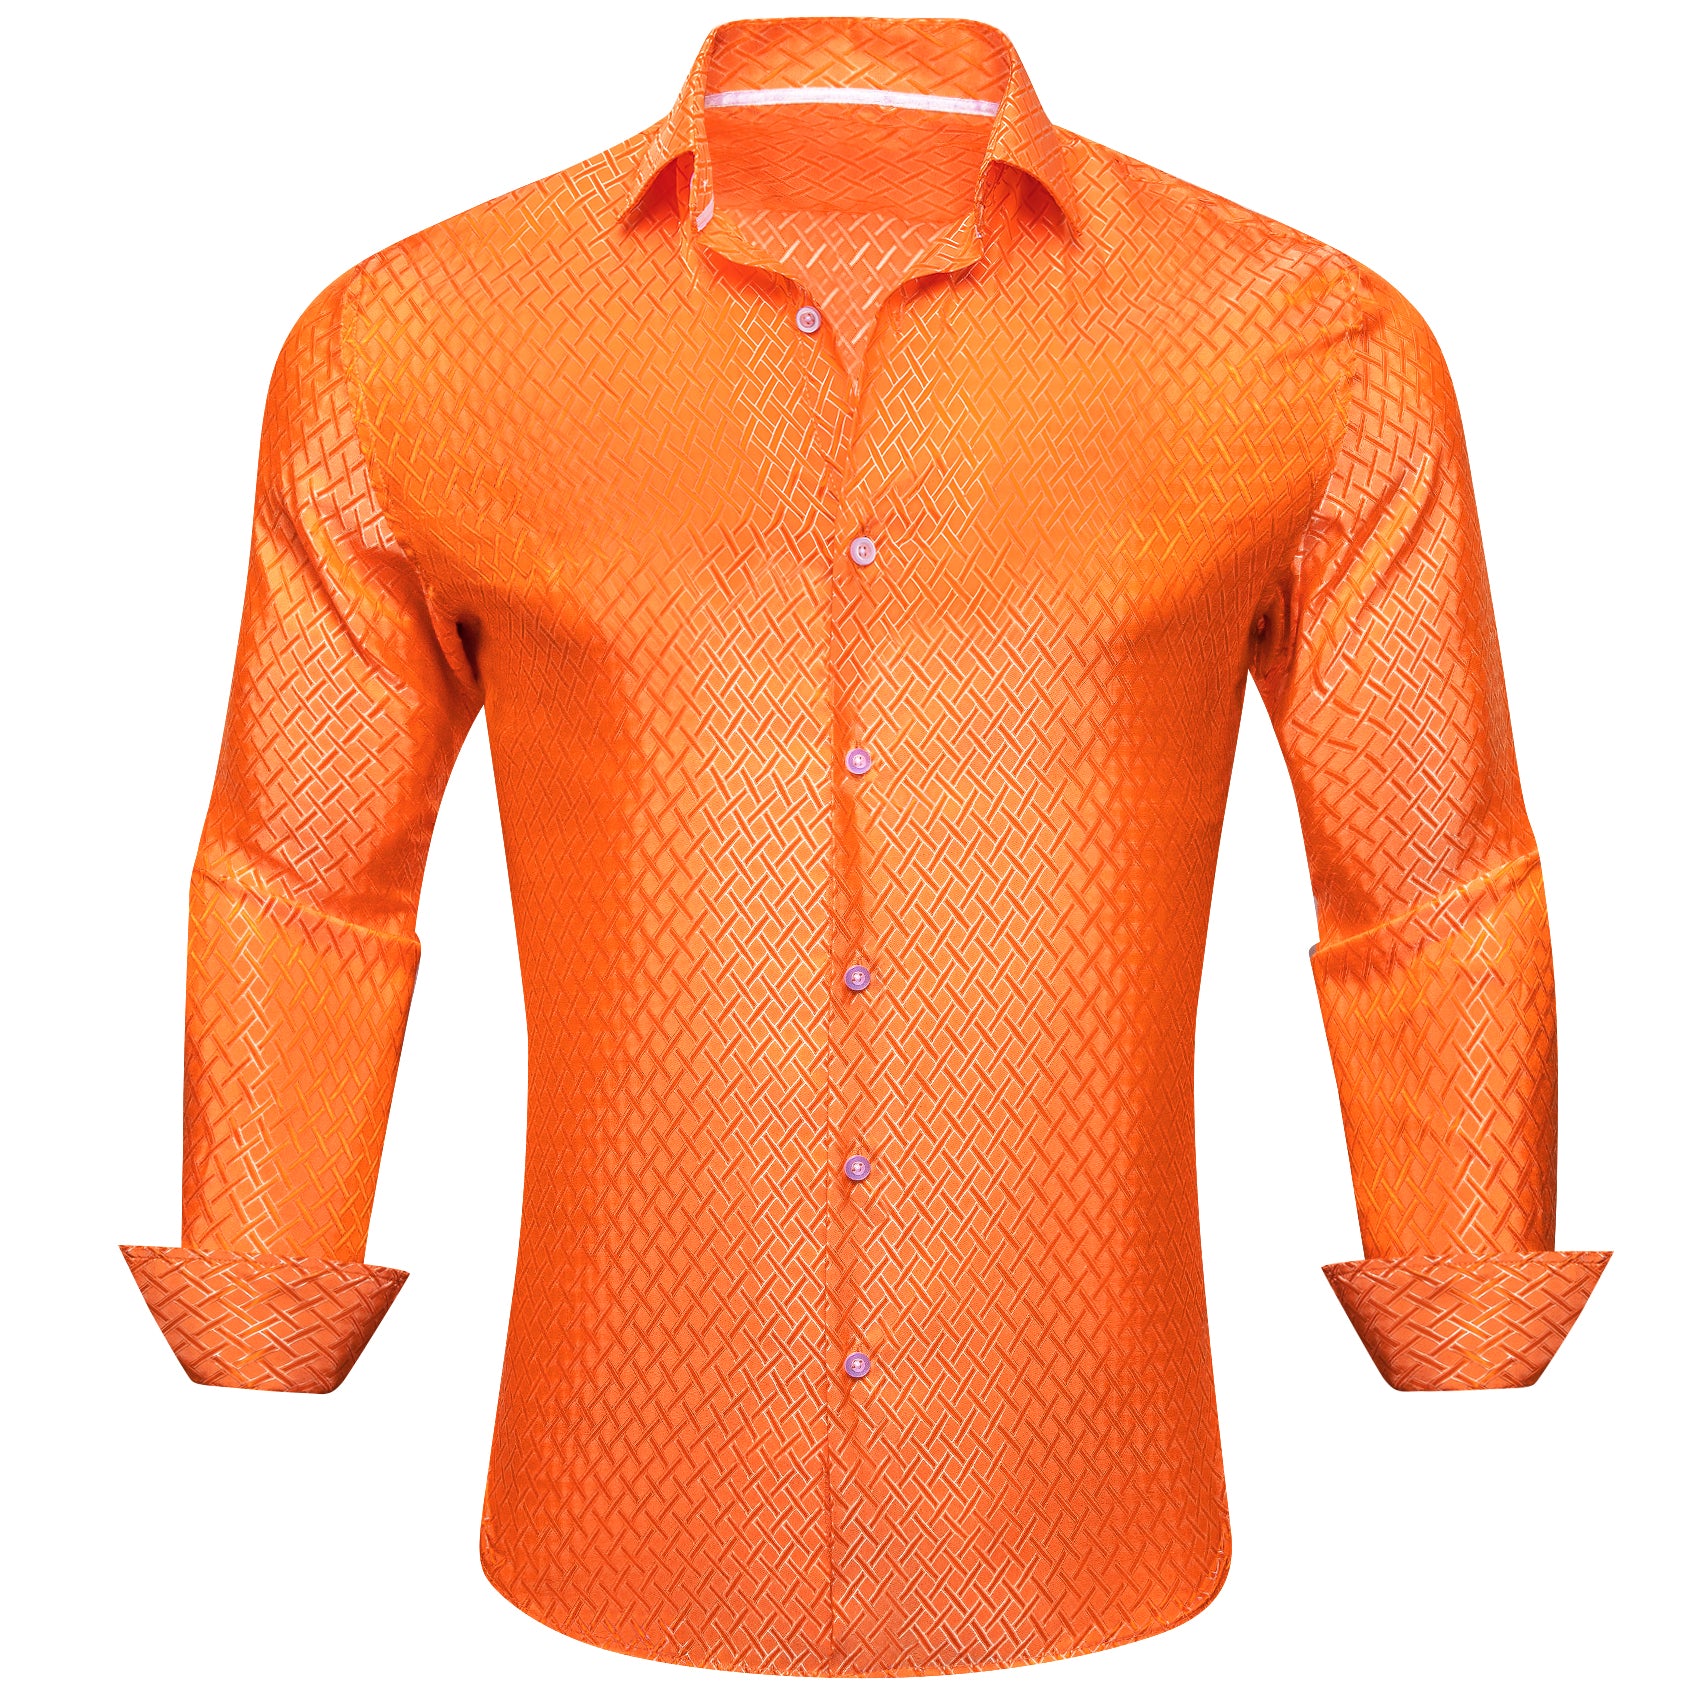 Barry.wang Orange Plaid Silk Men's Shirt